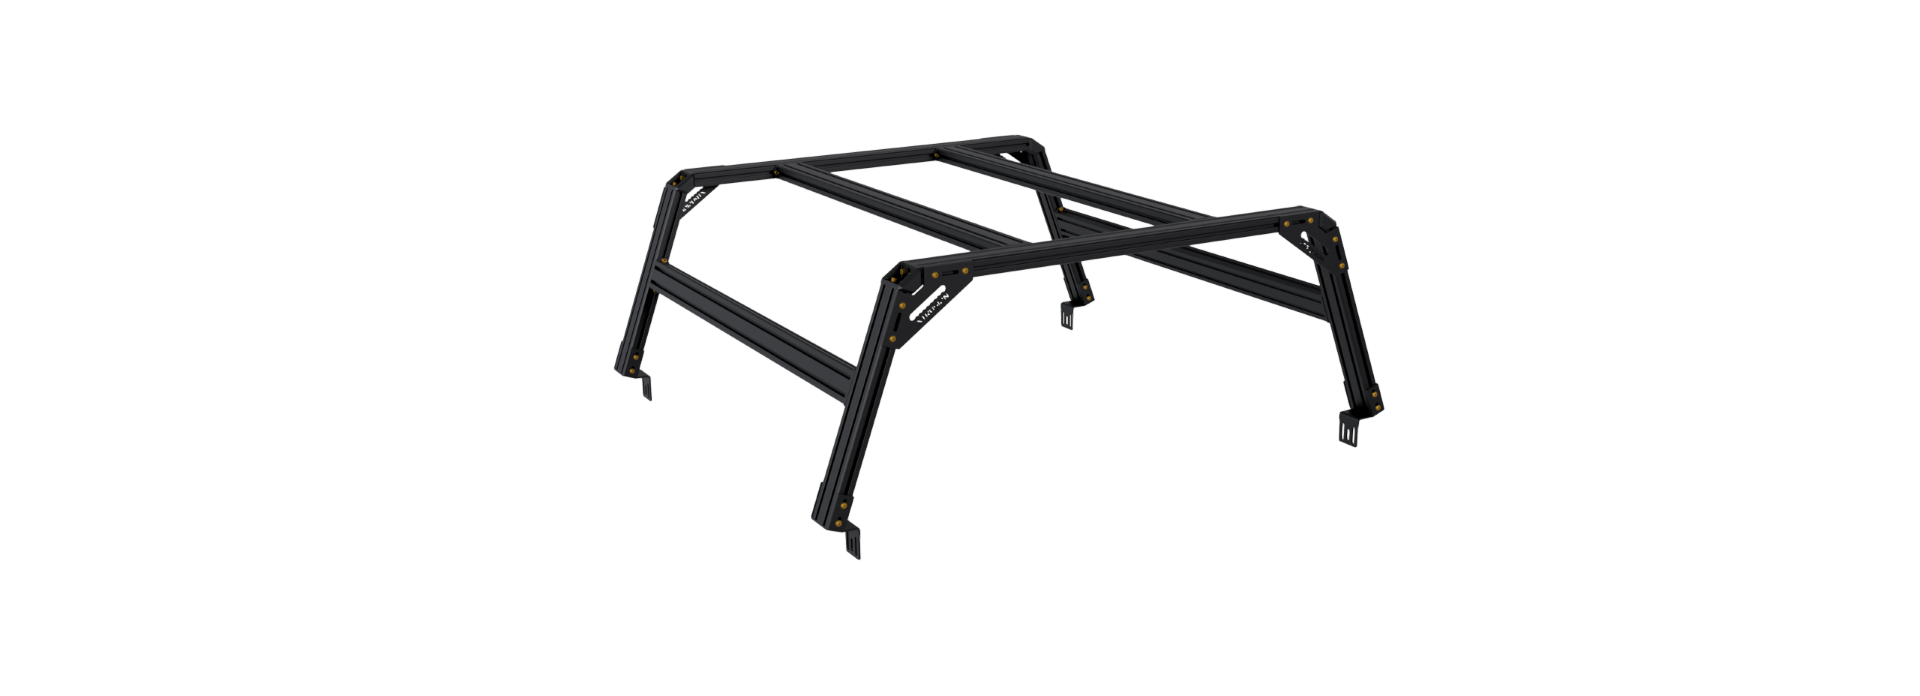 XTR1 Build-Your-Own Bed Rack - GM Silverado & Sierra 1500